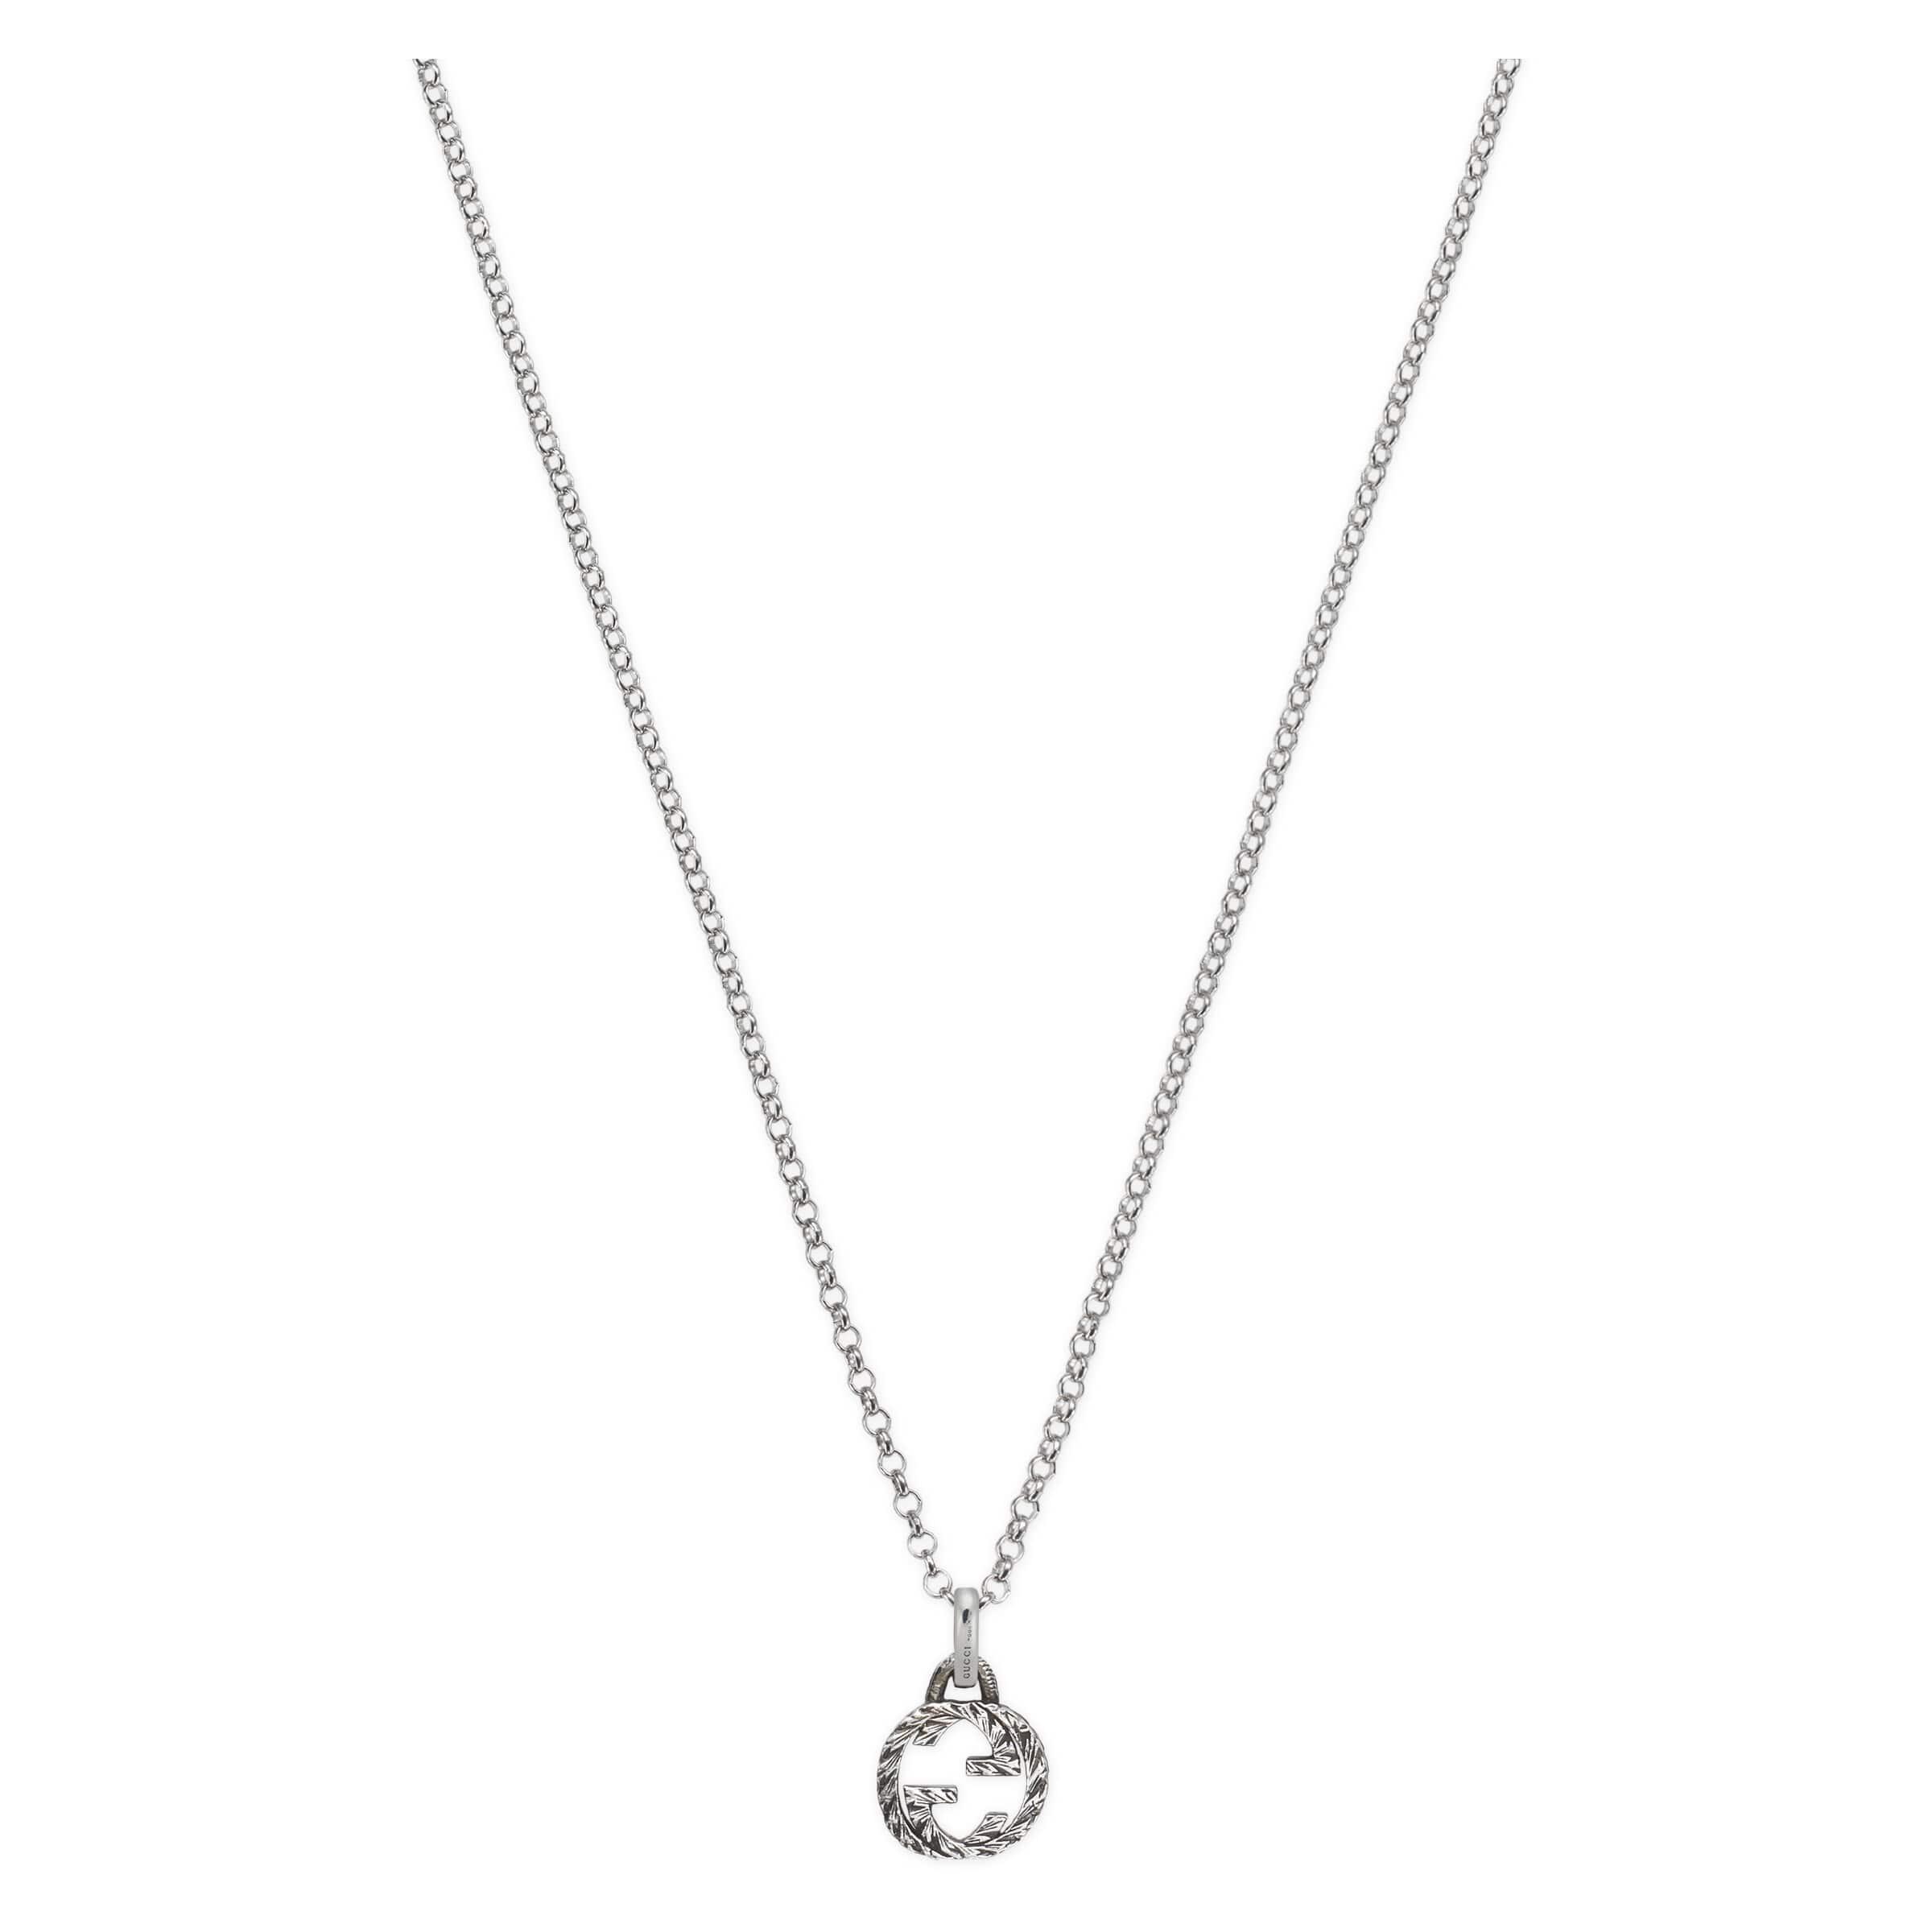 Gucci Interlocking G Pendant Necklace in Silver (Metallic) - Save 4% | Lyst